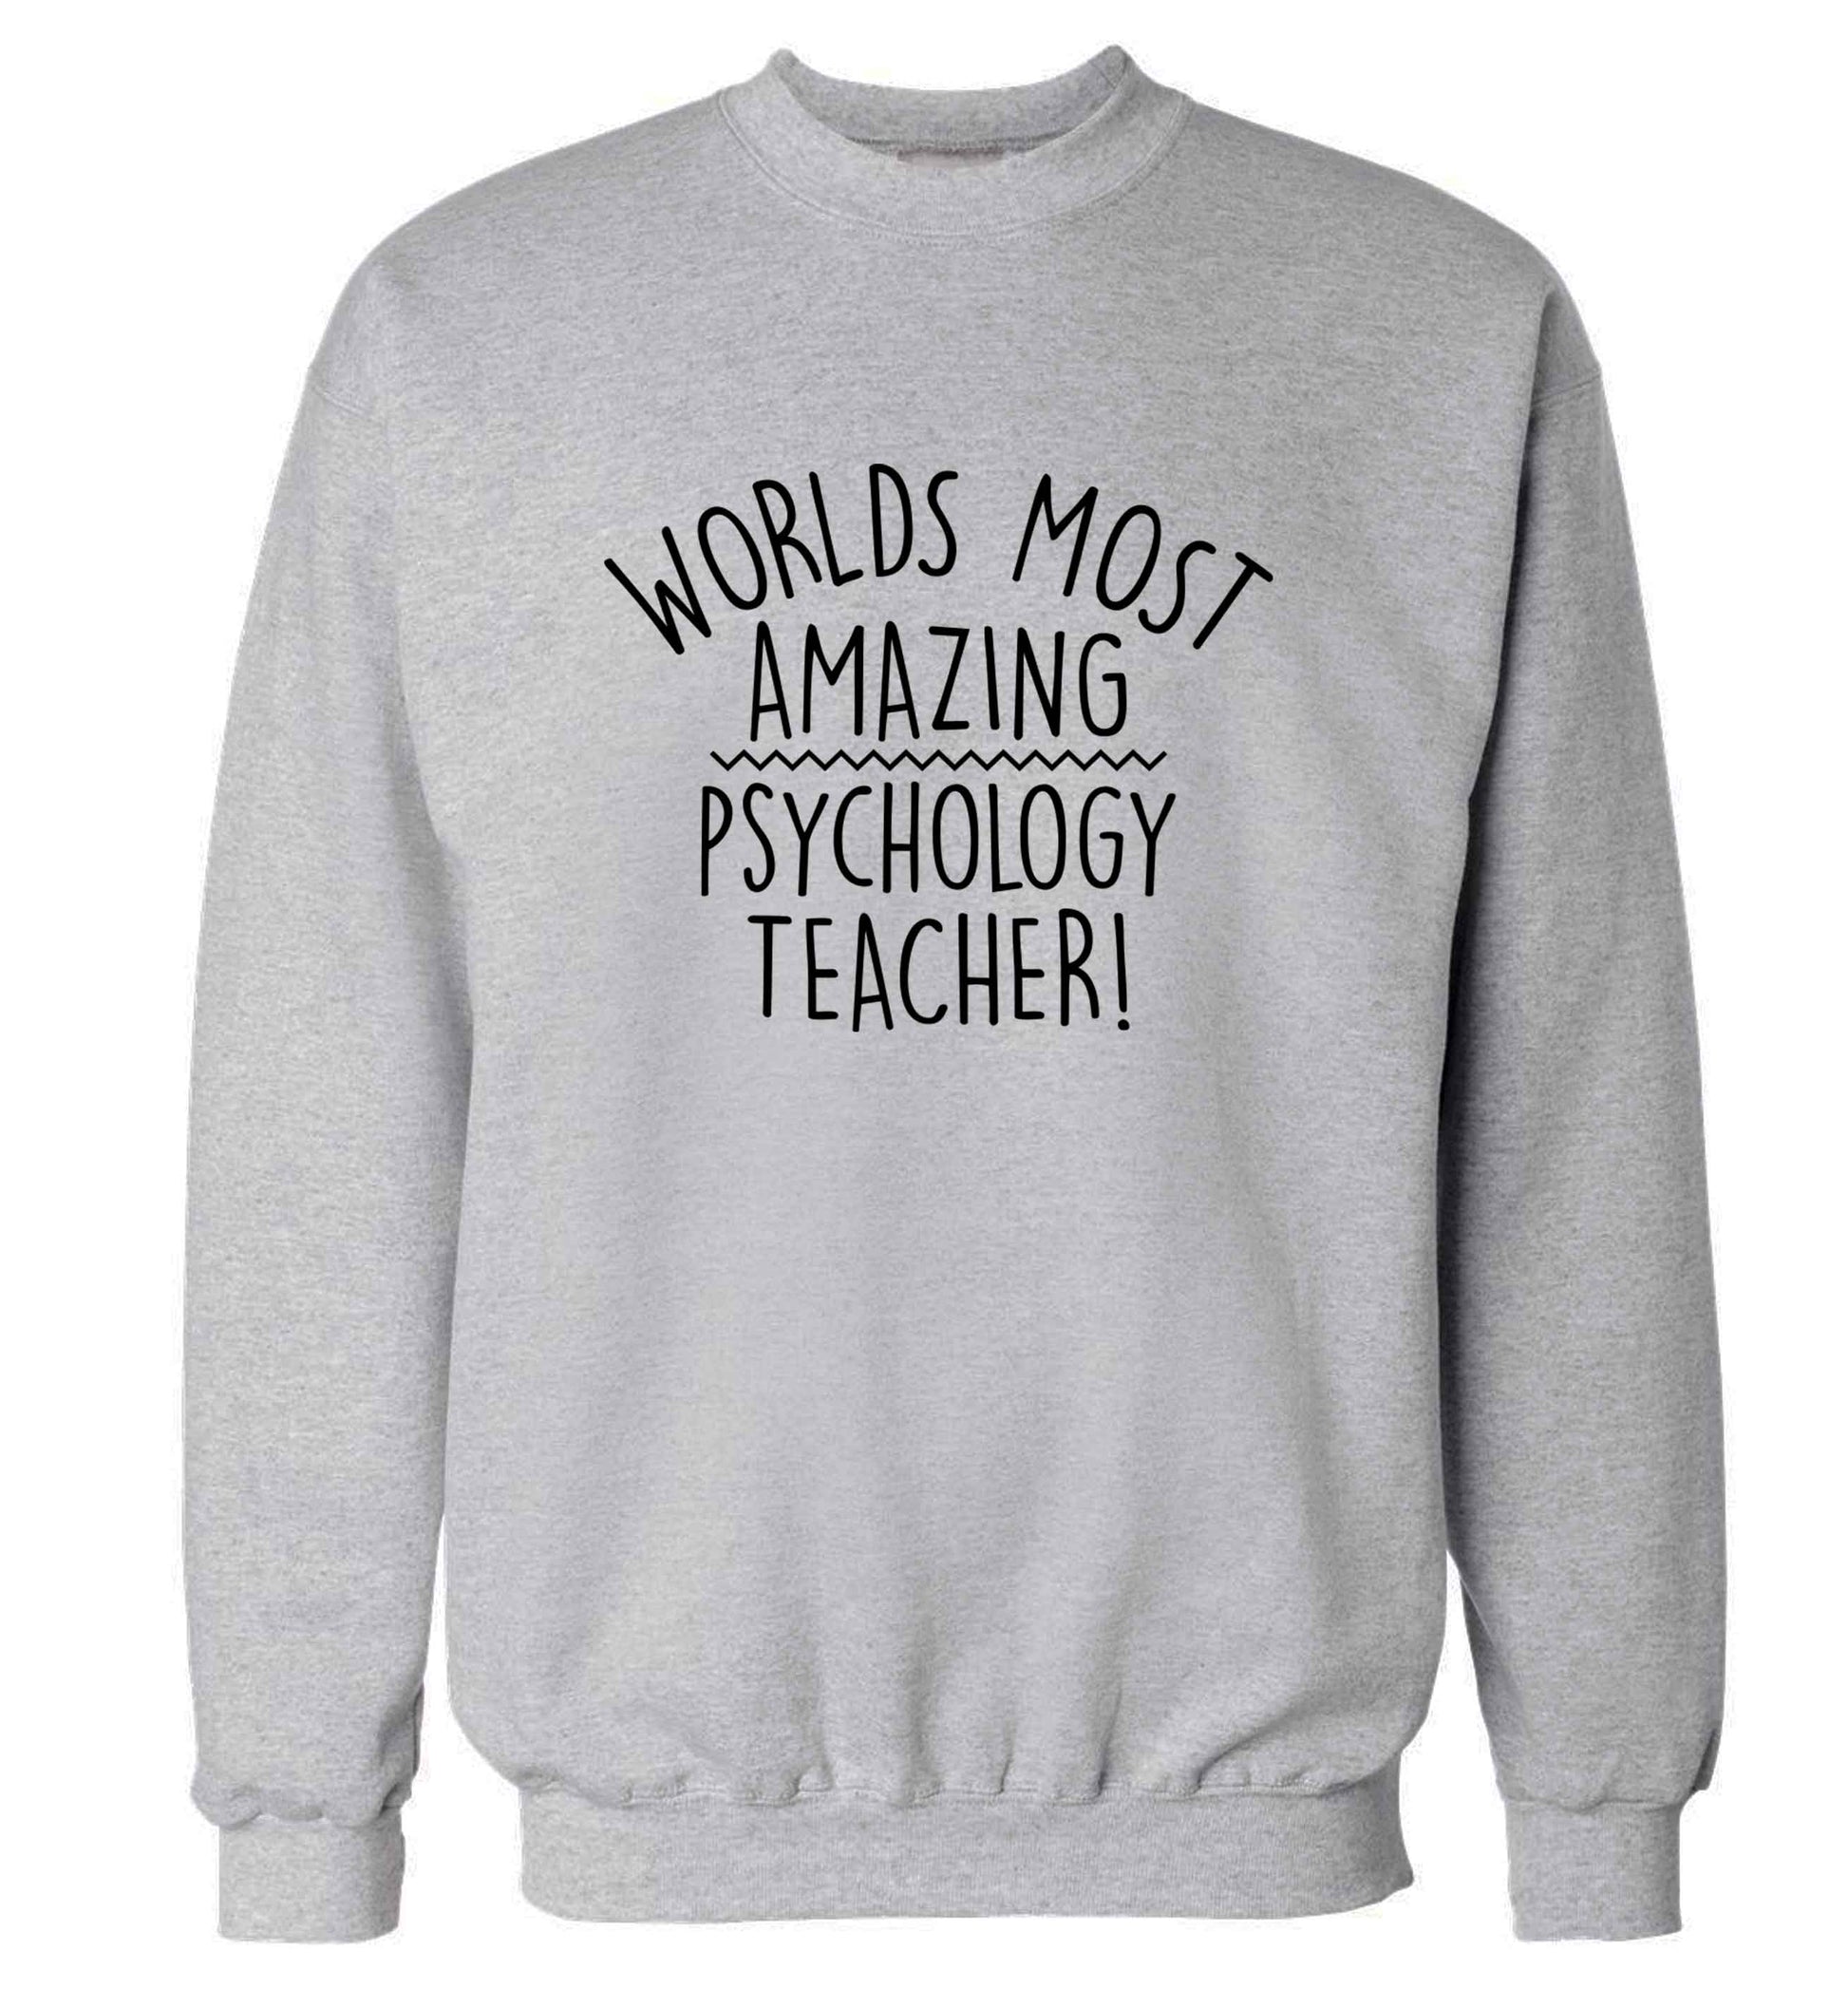 Worlds most amazing psychology teacher adult's unisex grey sweater 2XL